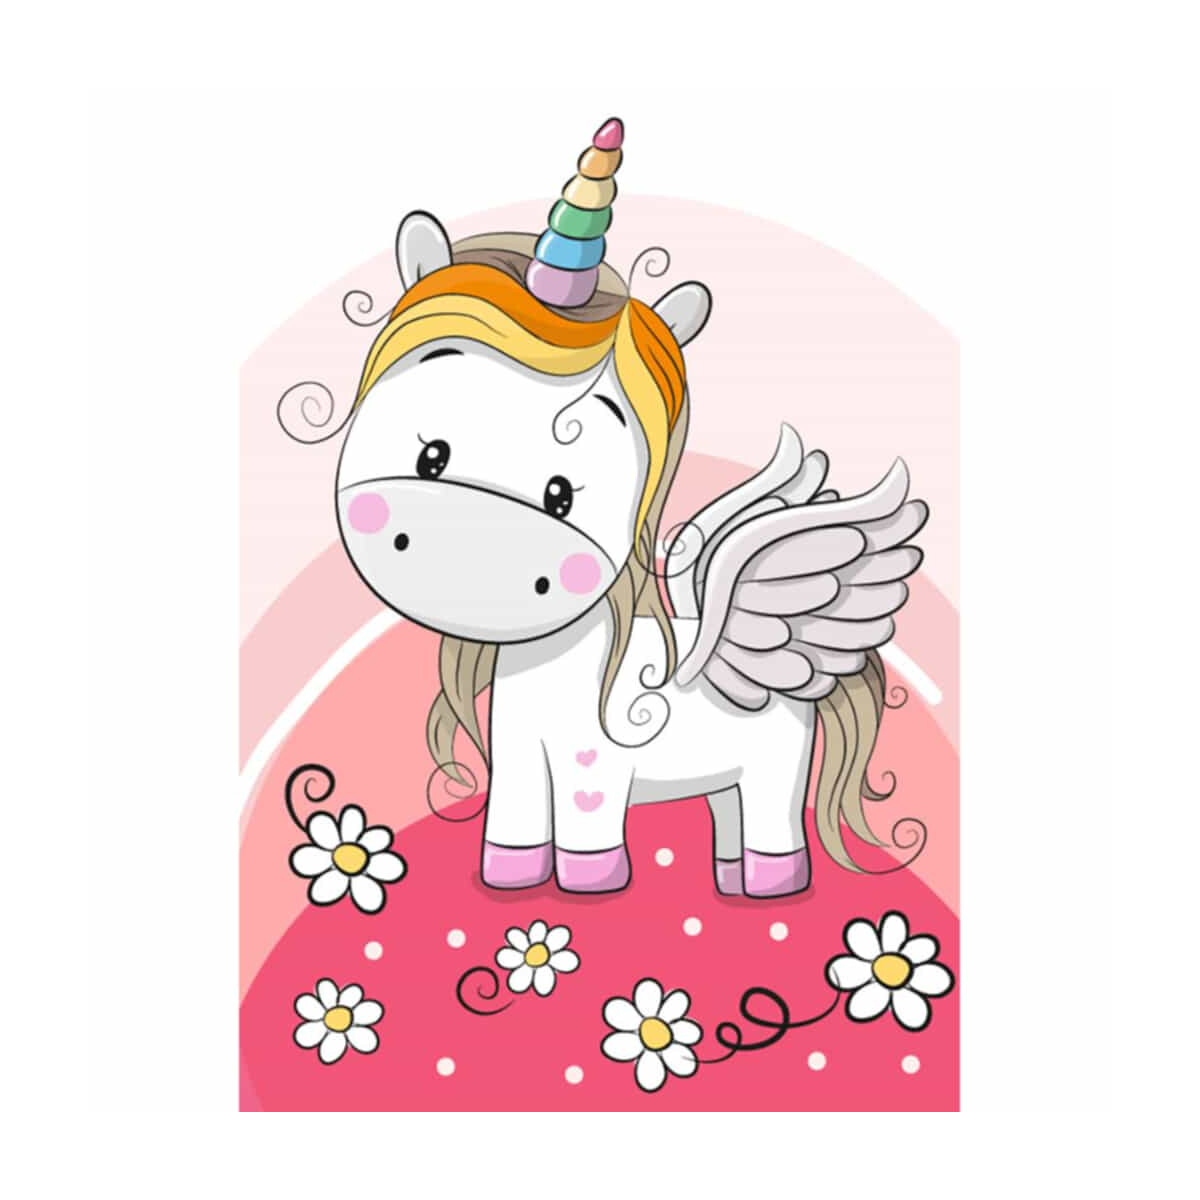 CdA Diamond Embroidery Kit "Little unicorn"...